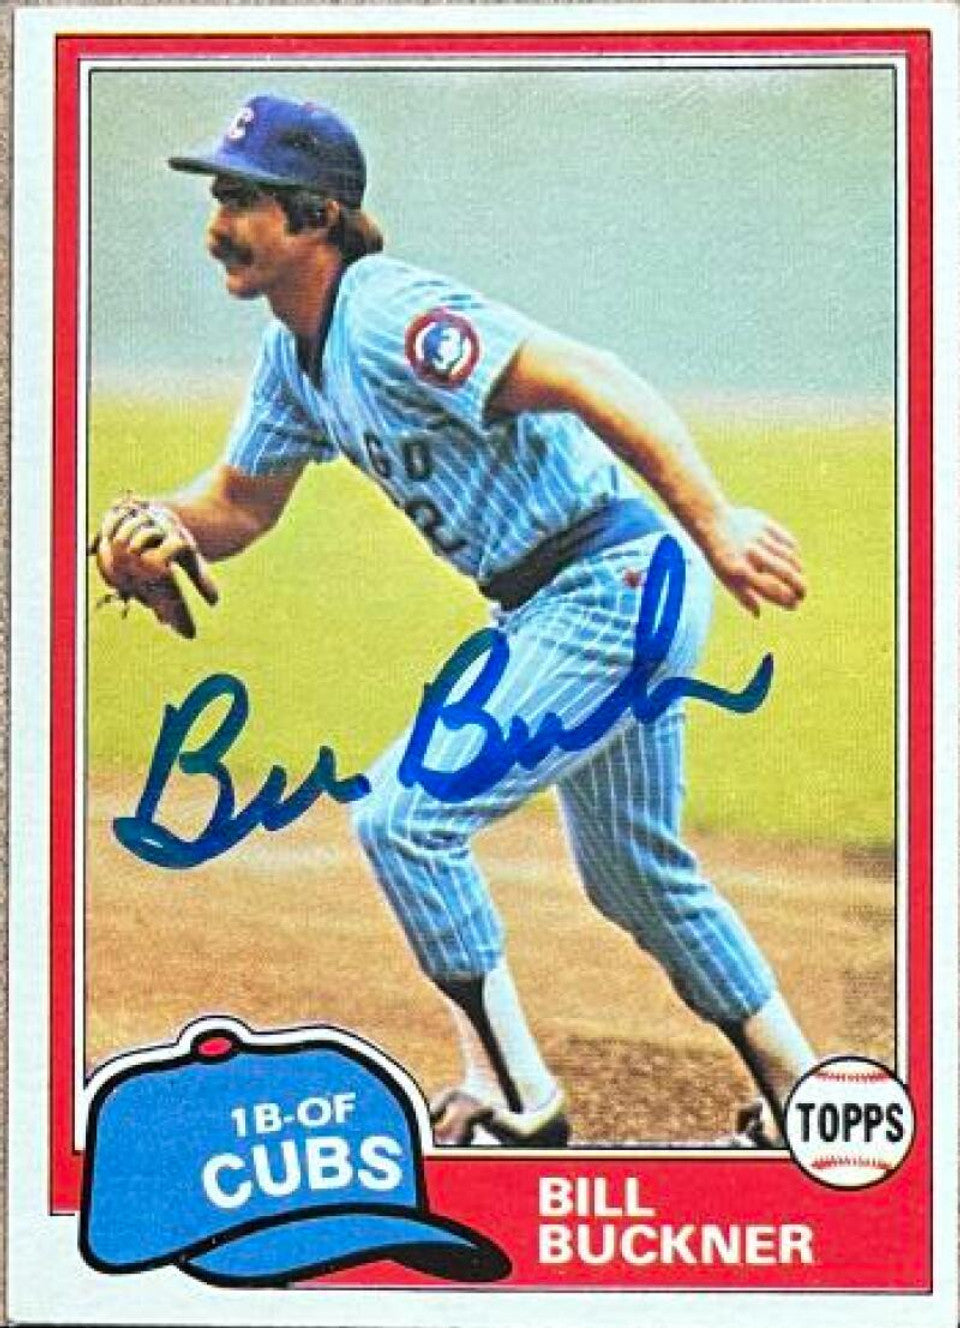 Bill Buckner Signed 1981 Topps Baseball Card - Chicago Cubs